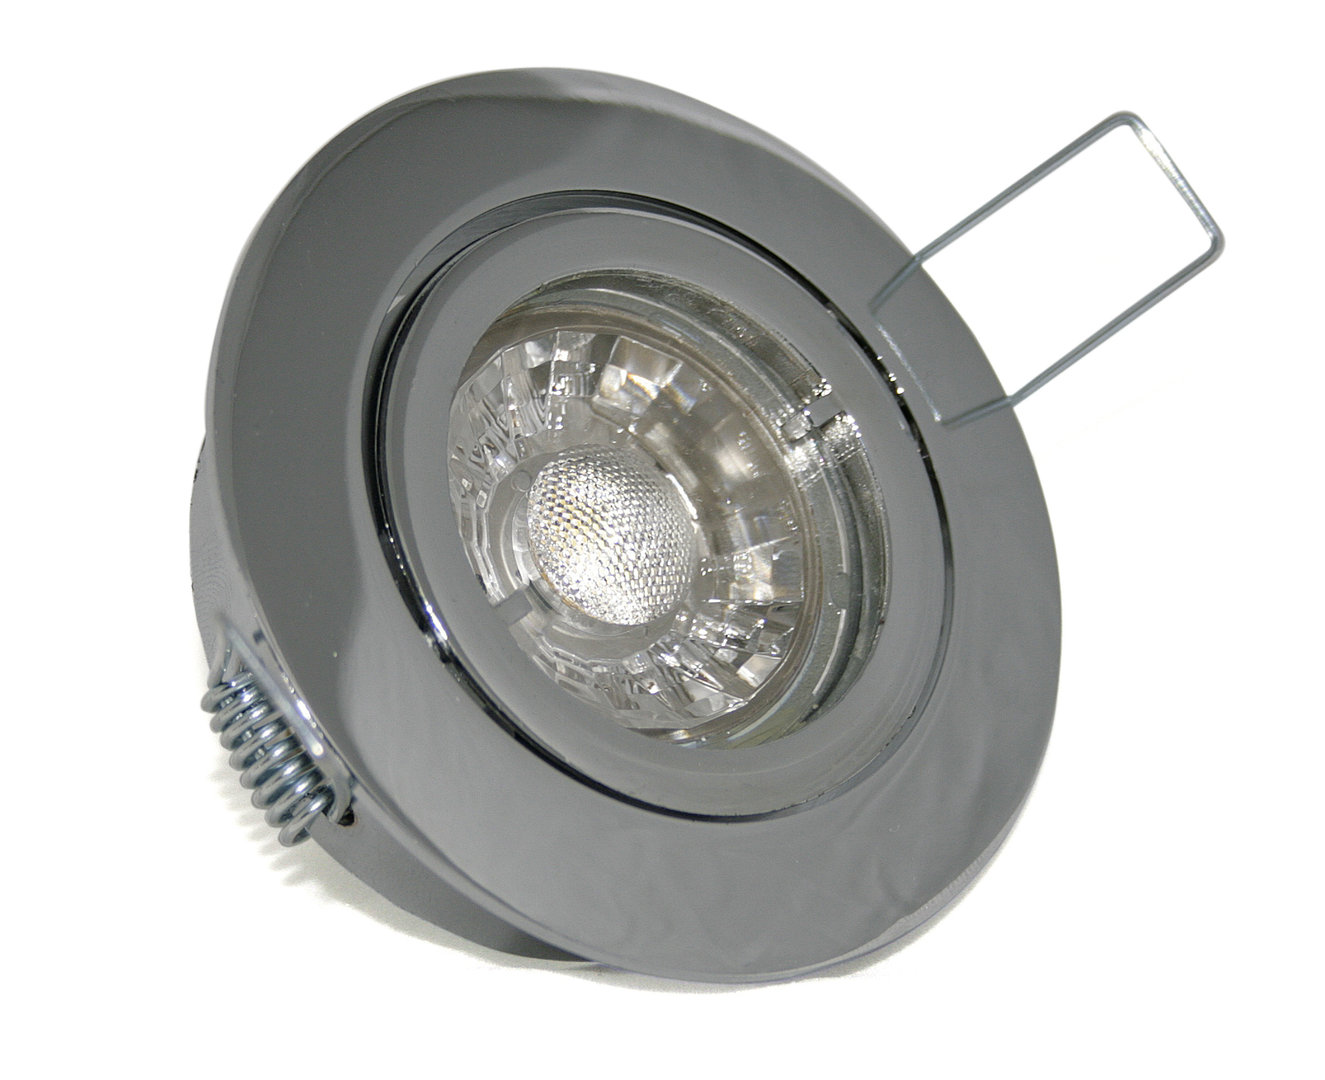 Kamilux® K9451 5W GU10 LED Lampe Einbaustrahler Einbauleuchte Rahmen Einbauspot 